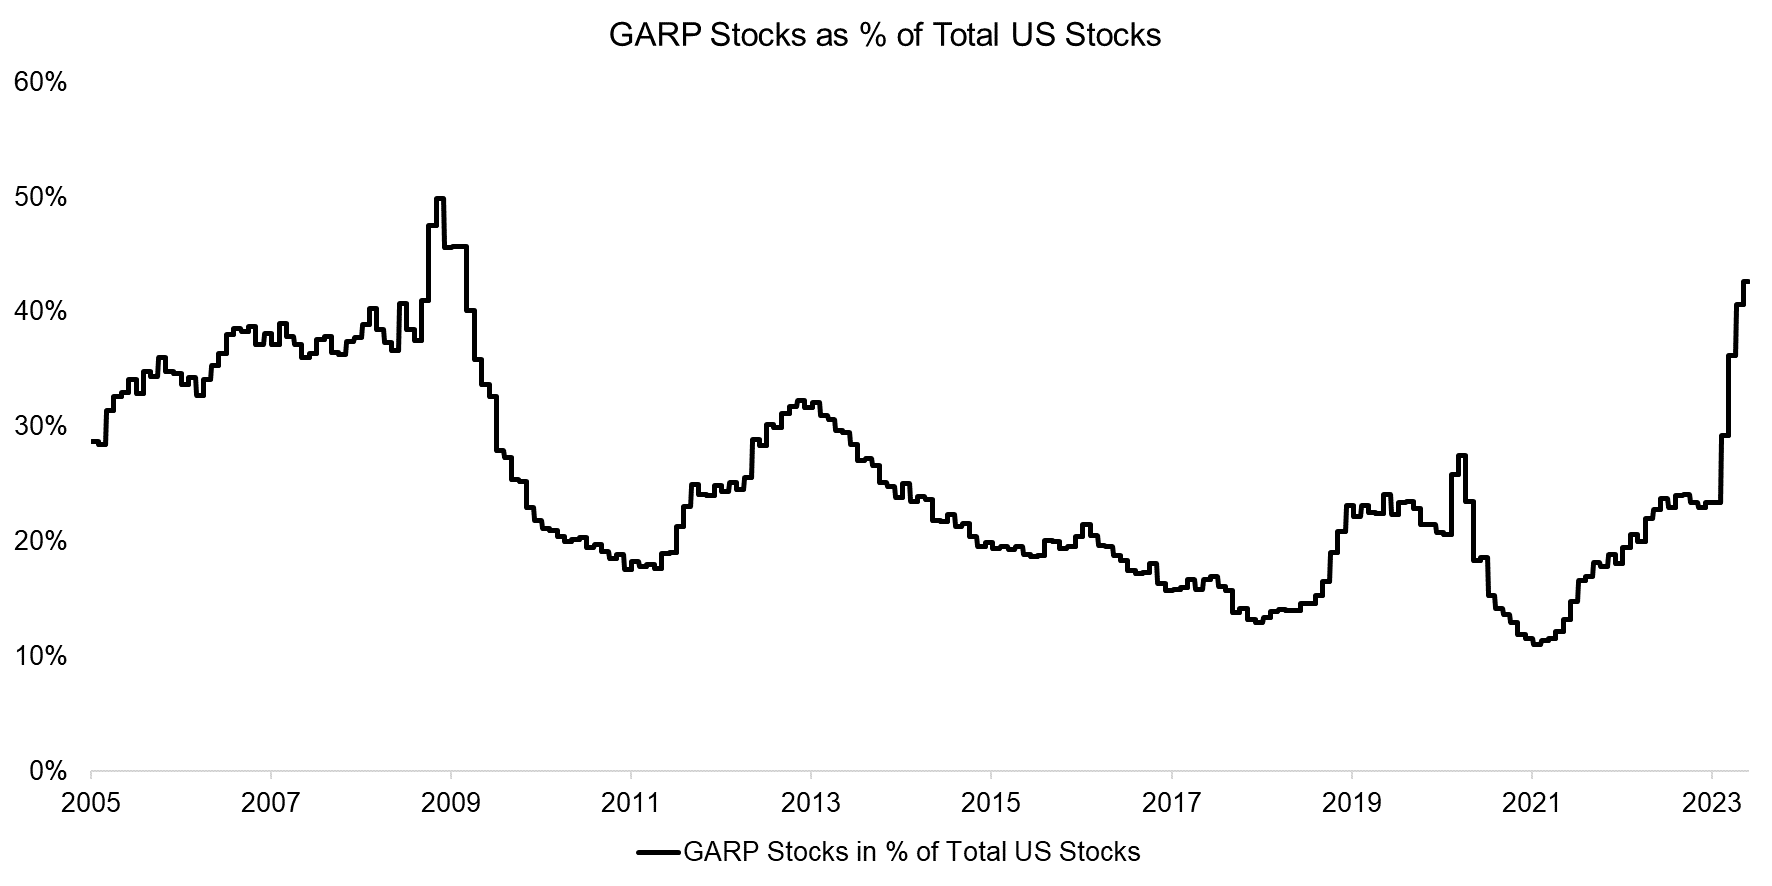 GARP Stocks as % of Total US Stocks